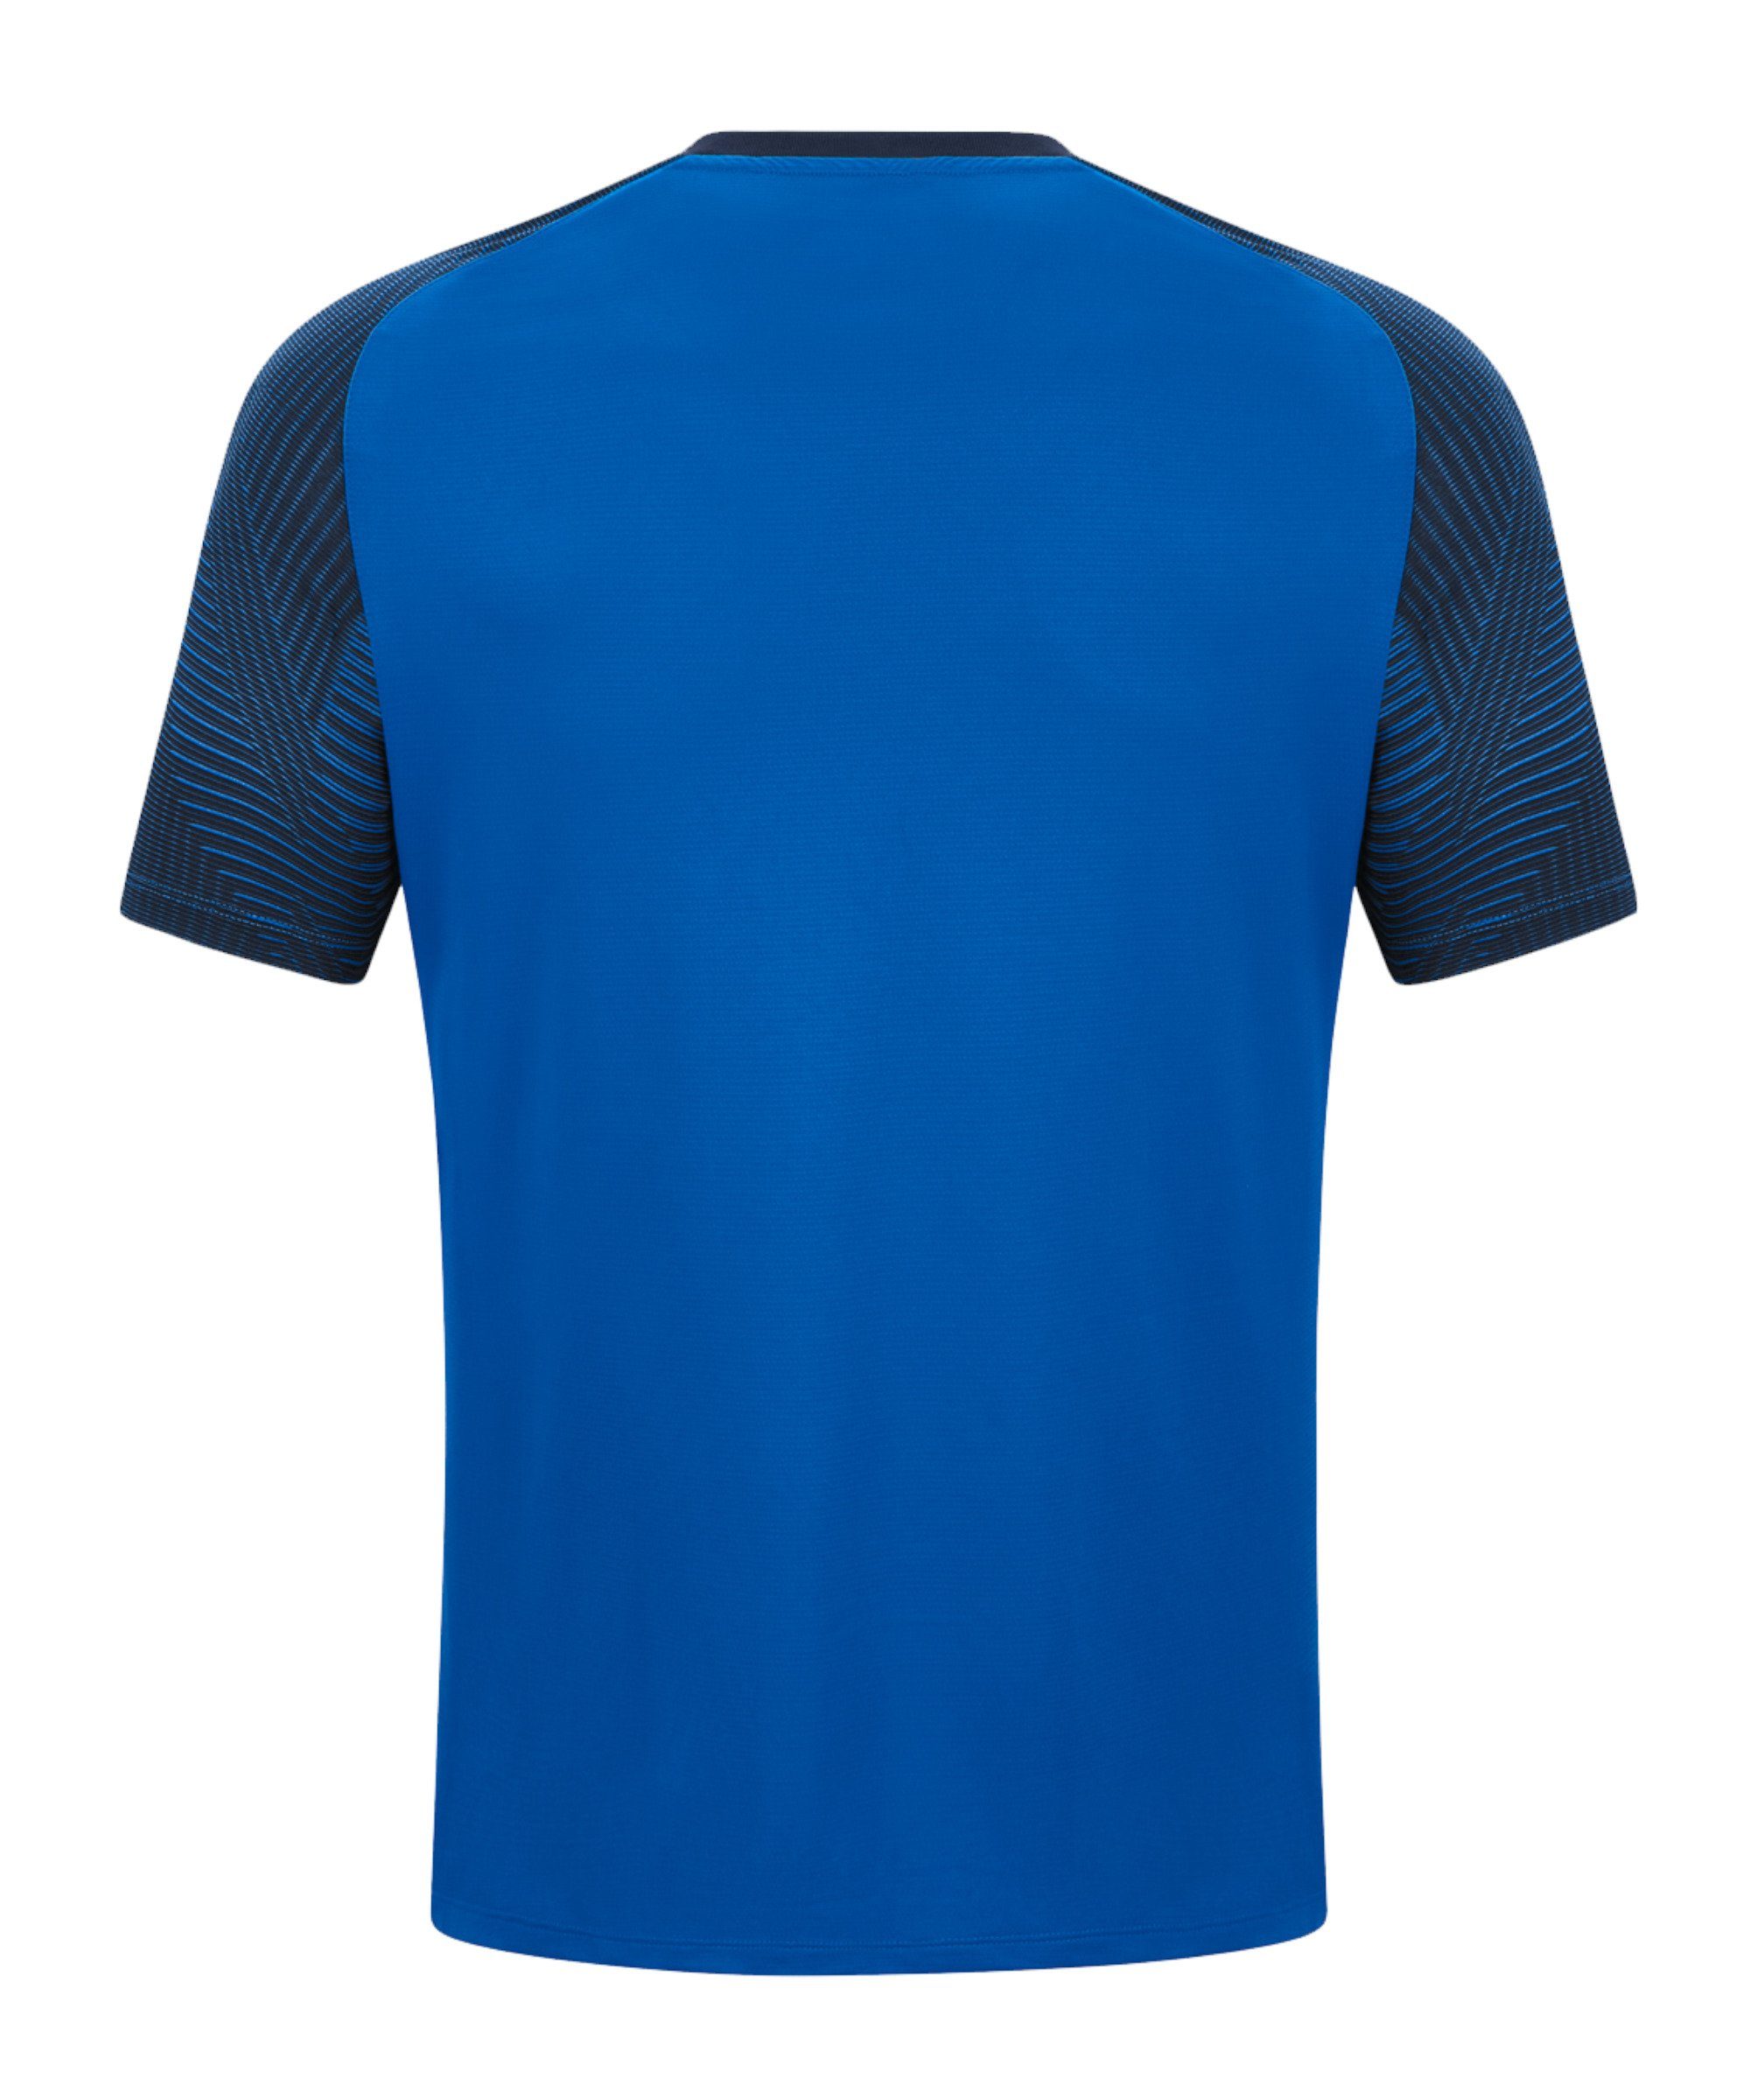 Jako T-Shirt Performance T-Shirt Dunkel blaublau default